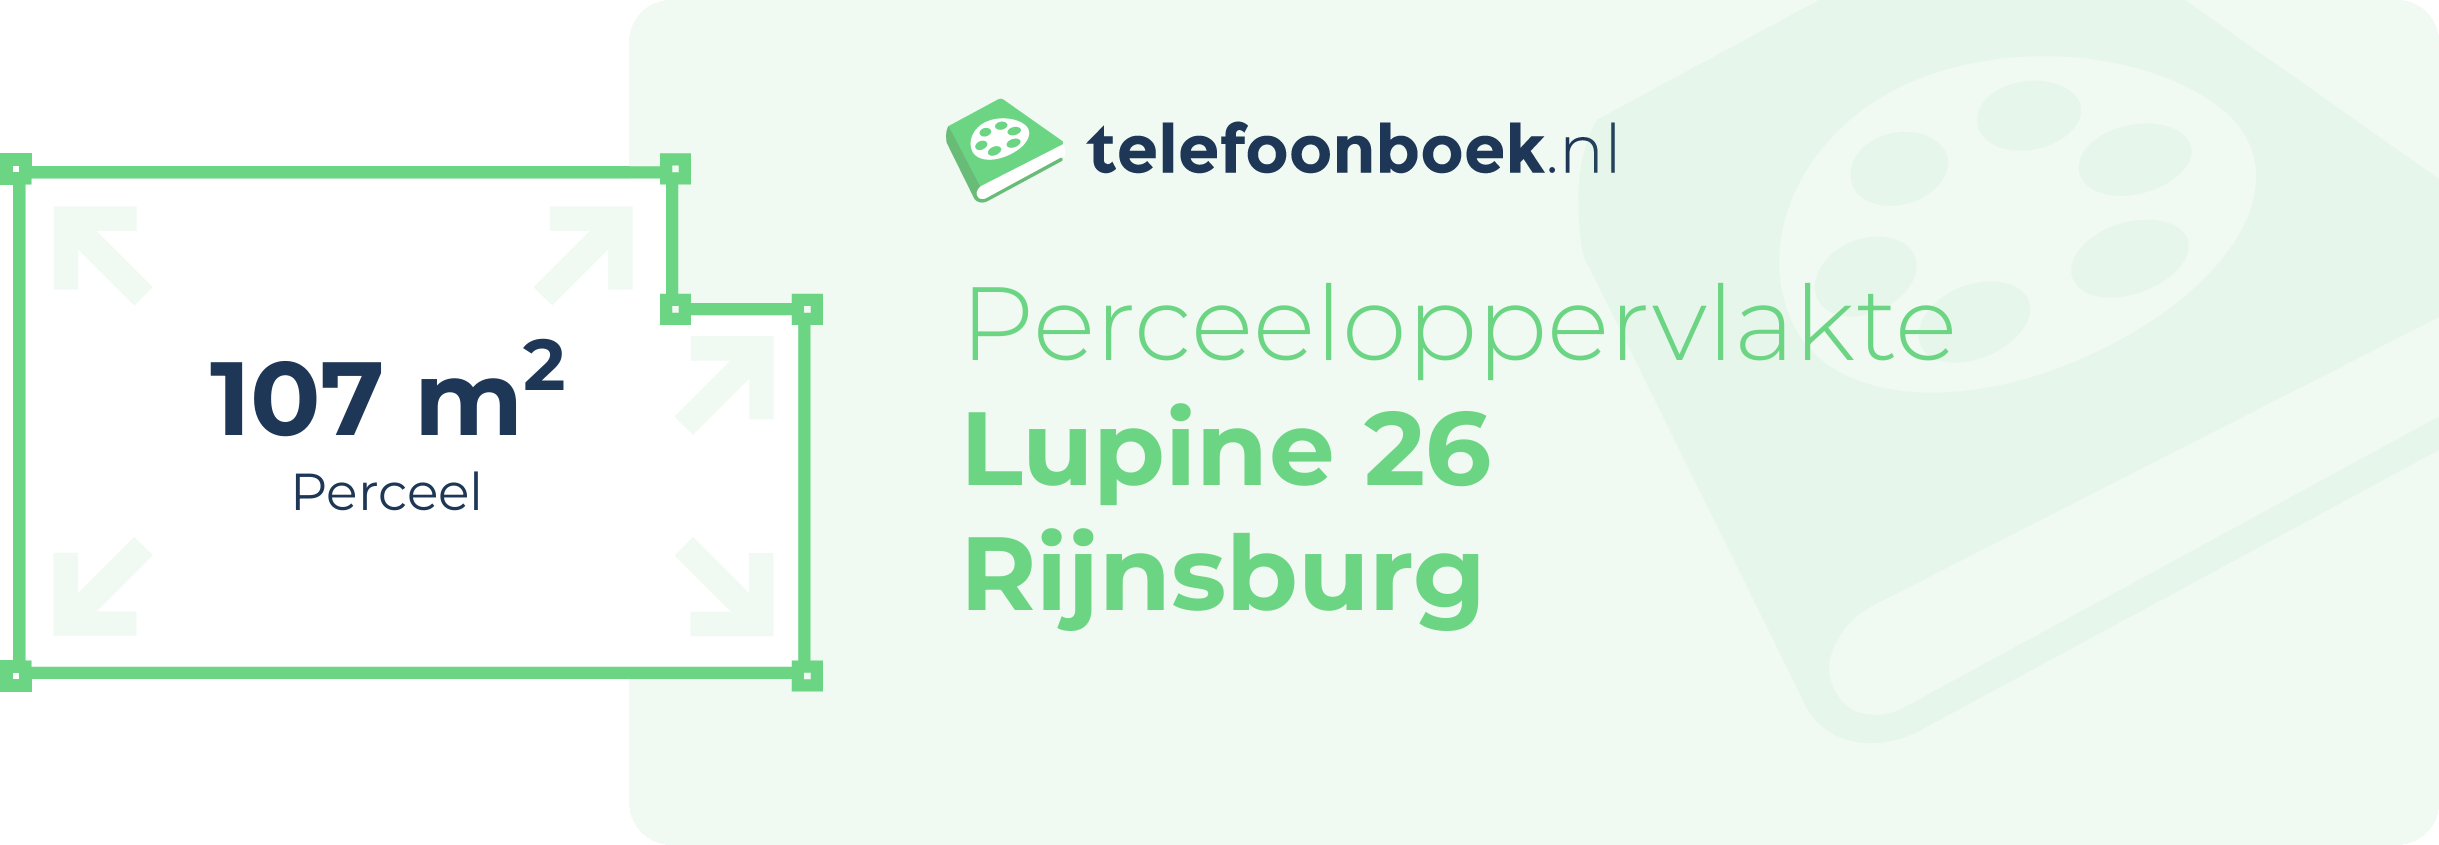 Perceeloppervlakte Lupine 26 Rijnsburg